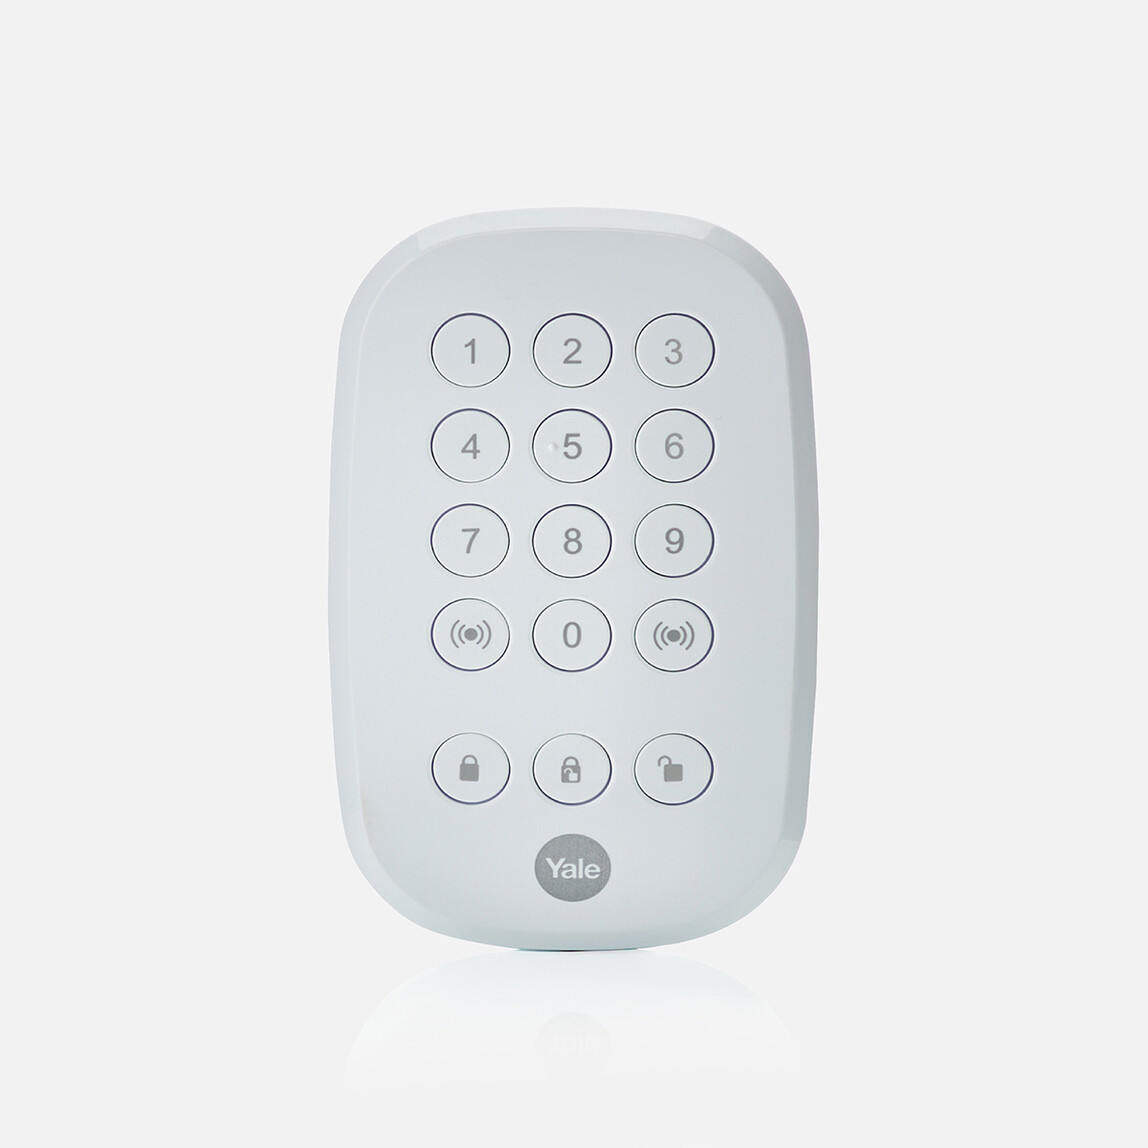    Yale Sync Smart Home Alarm Duvar Tipi Tuş Takimi Kumanda  